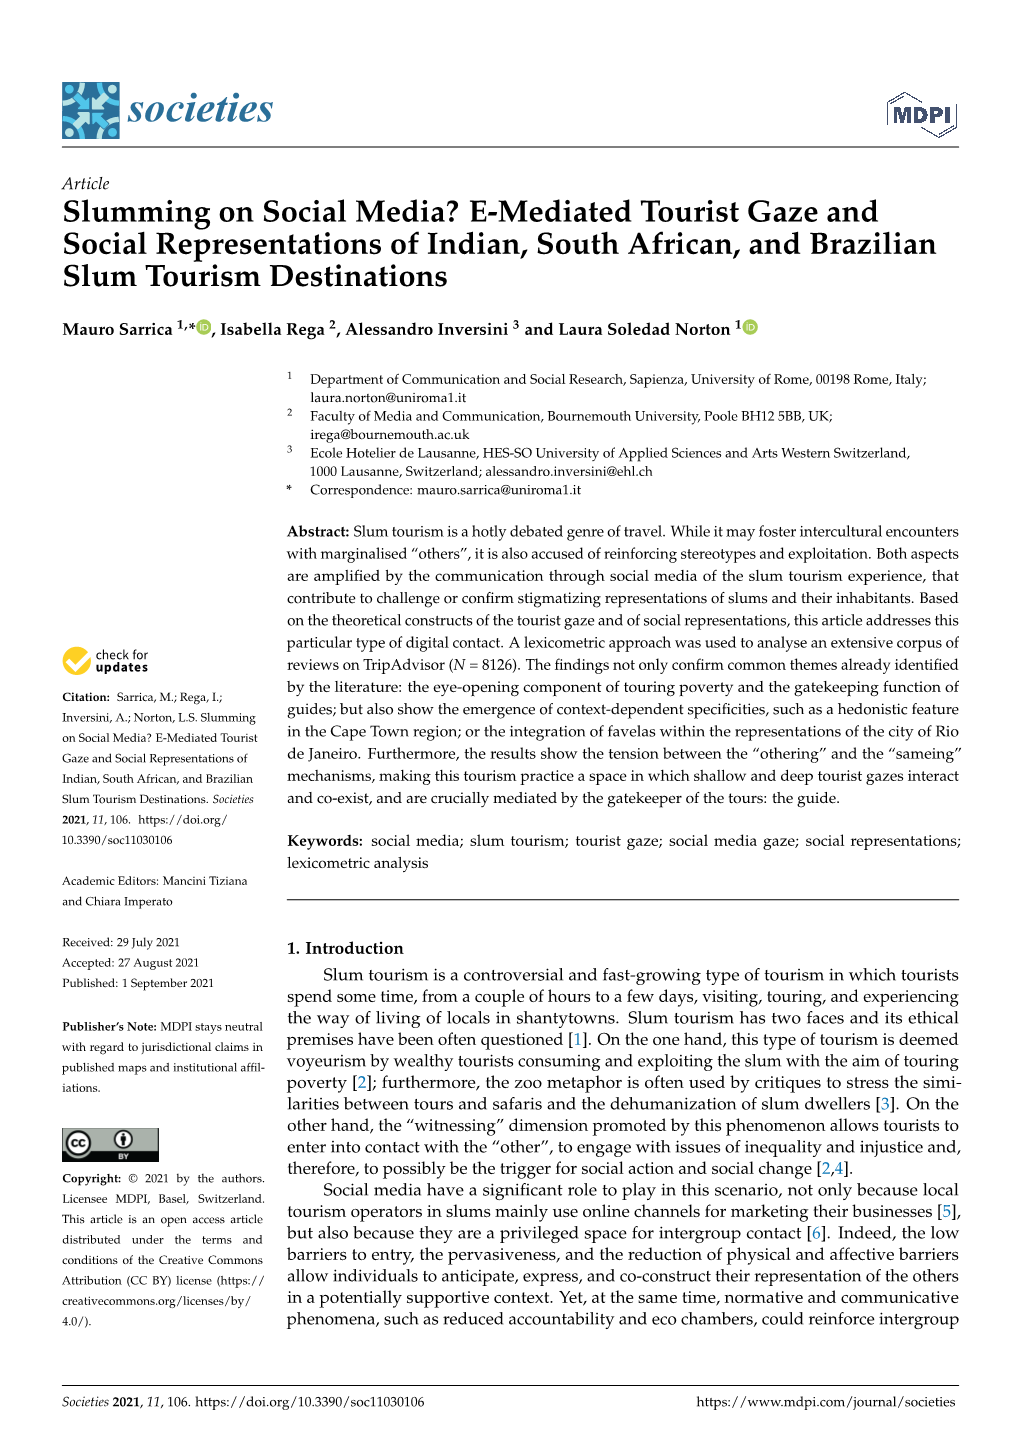 E-Mediated Tourist Gaze and Social Representations of Indian, South African, and Brazilian Slum Tourism Destinations